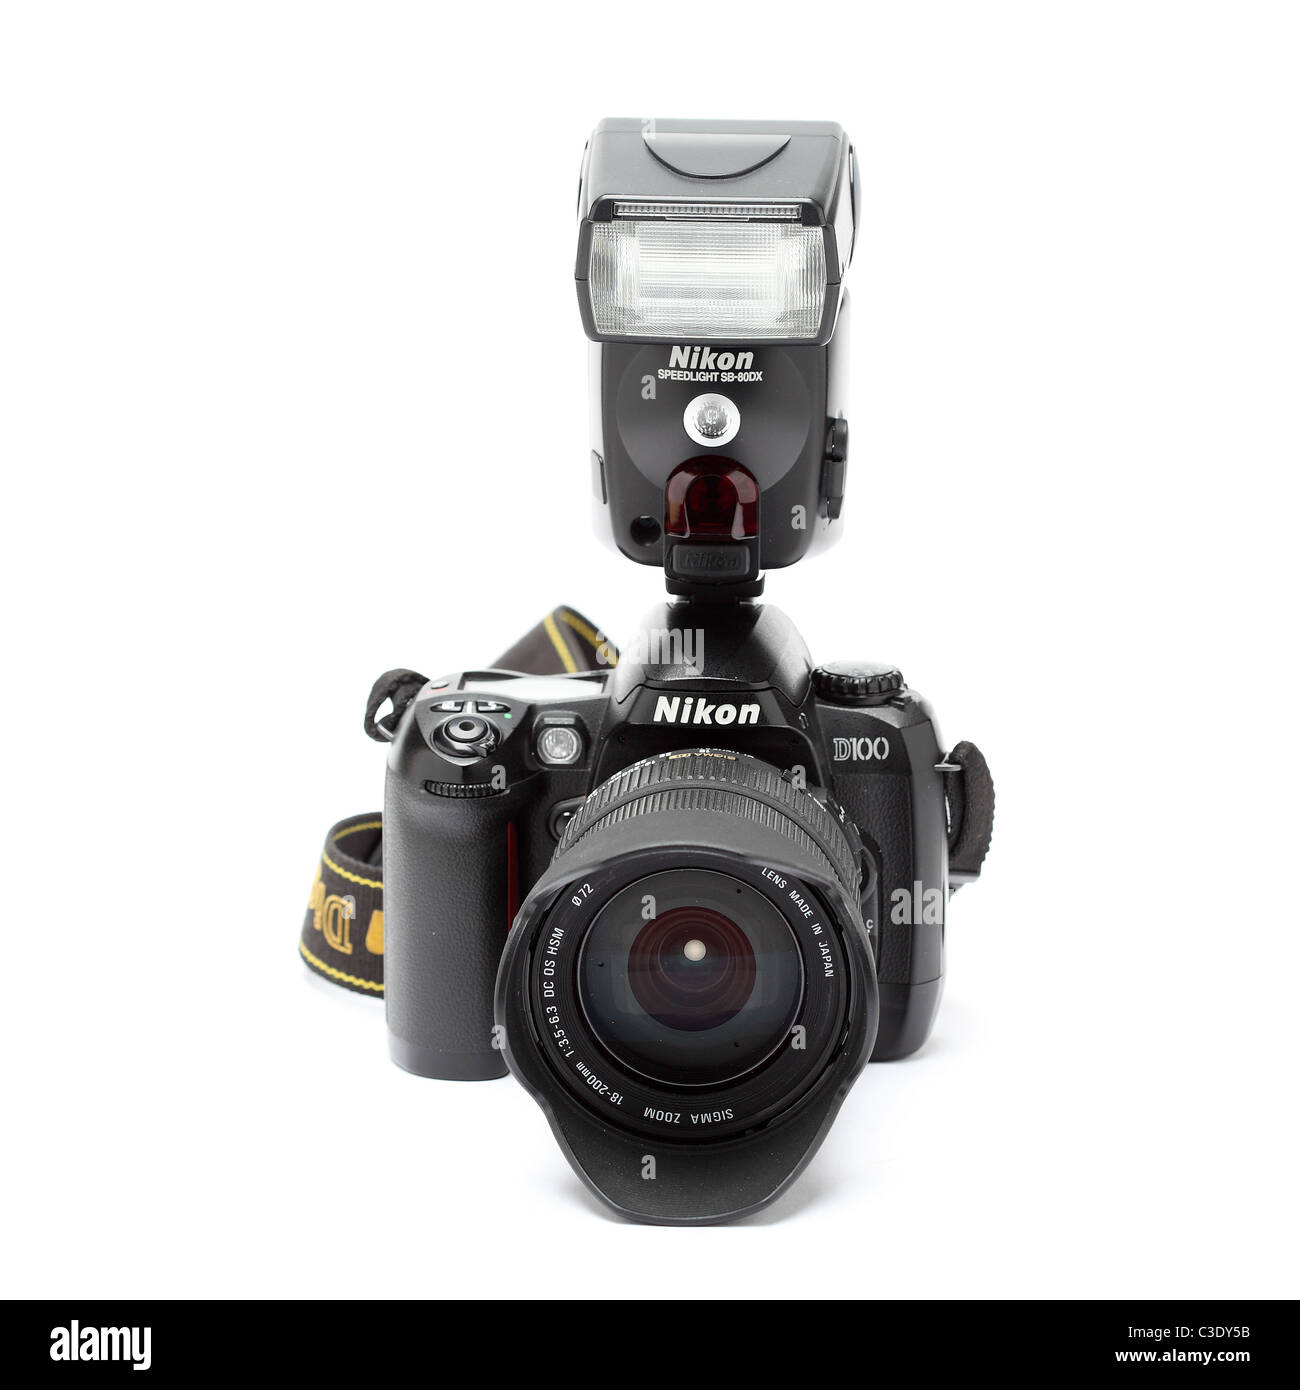 Nikon flash hi-res stock photography and images - Alamy